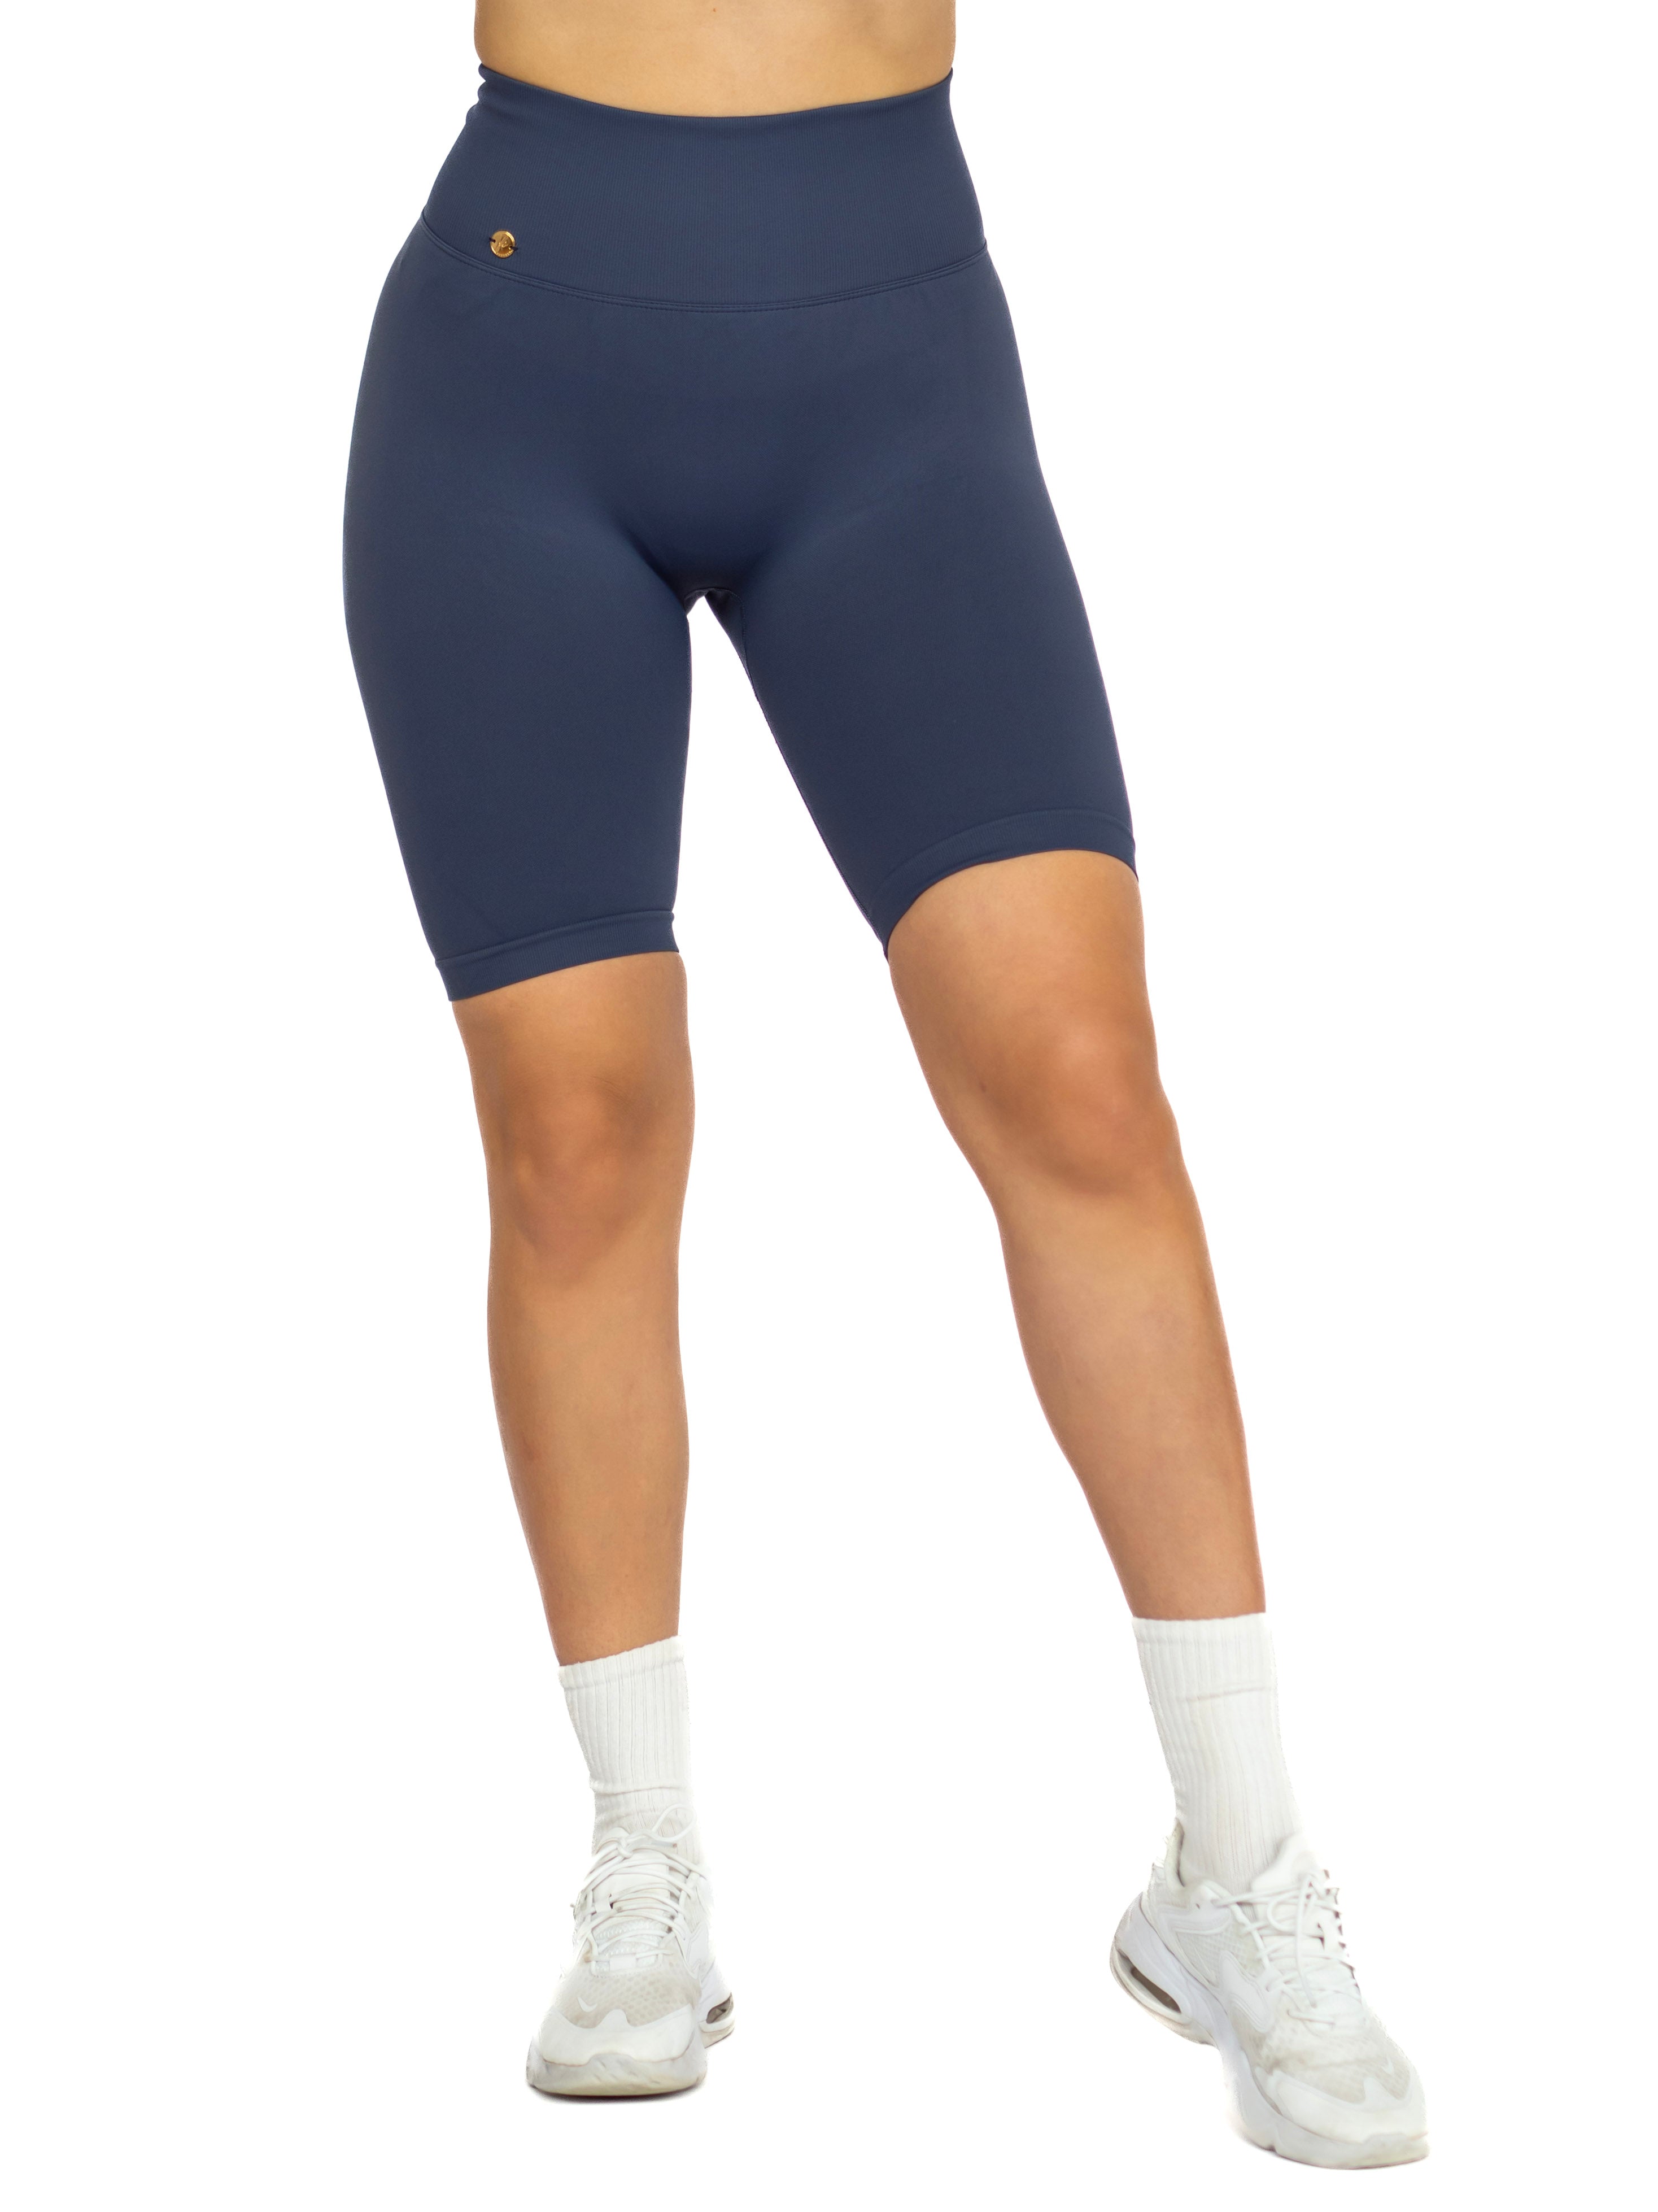 Perfect Peachy Biker Shorts - Blueberry